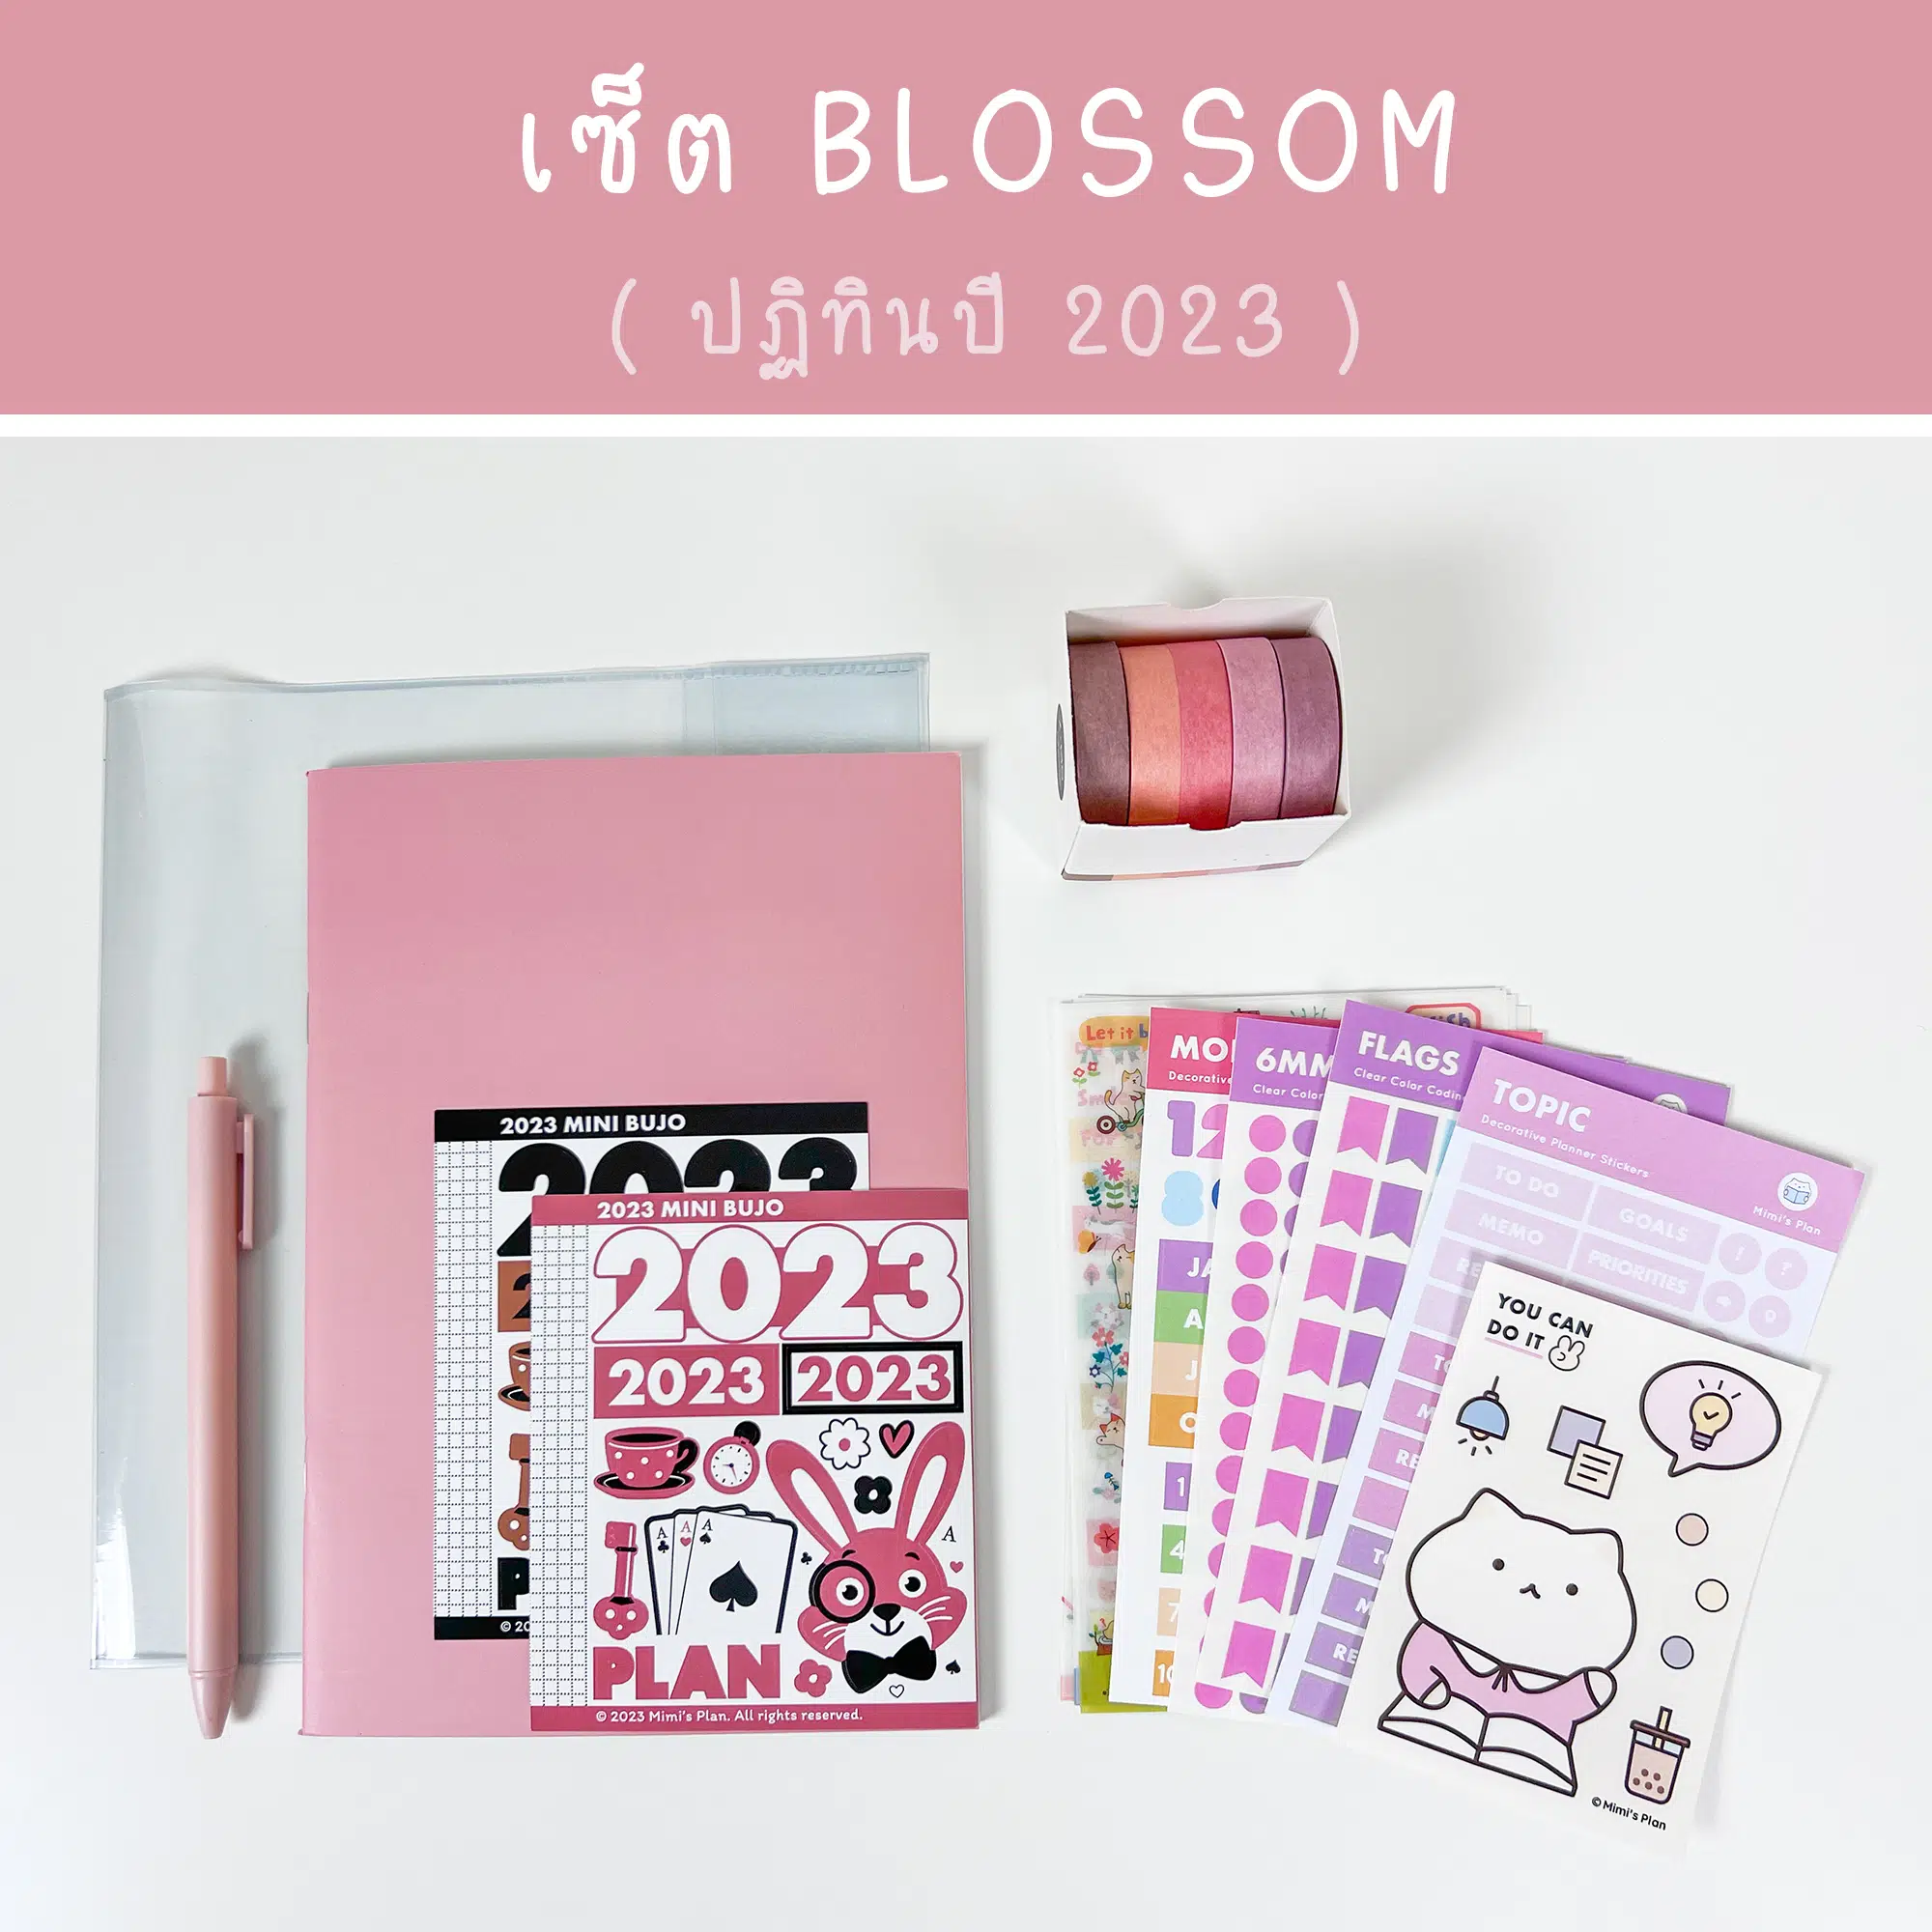 2023 mini bujo full set – 9 Blossom